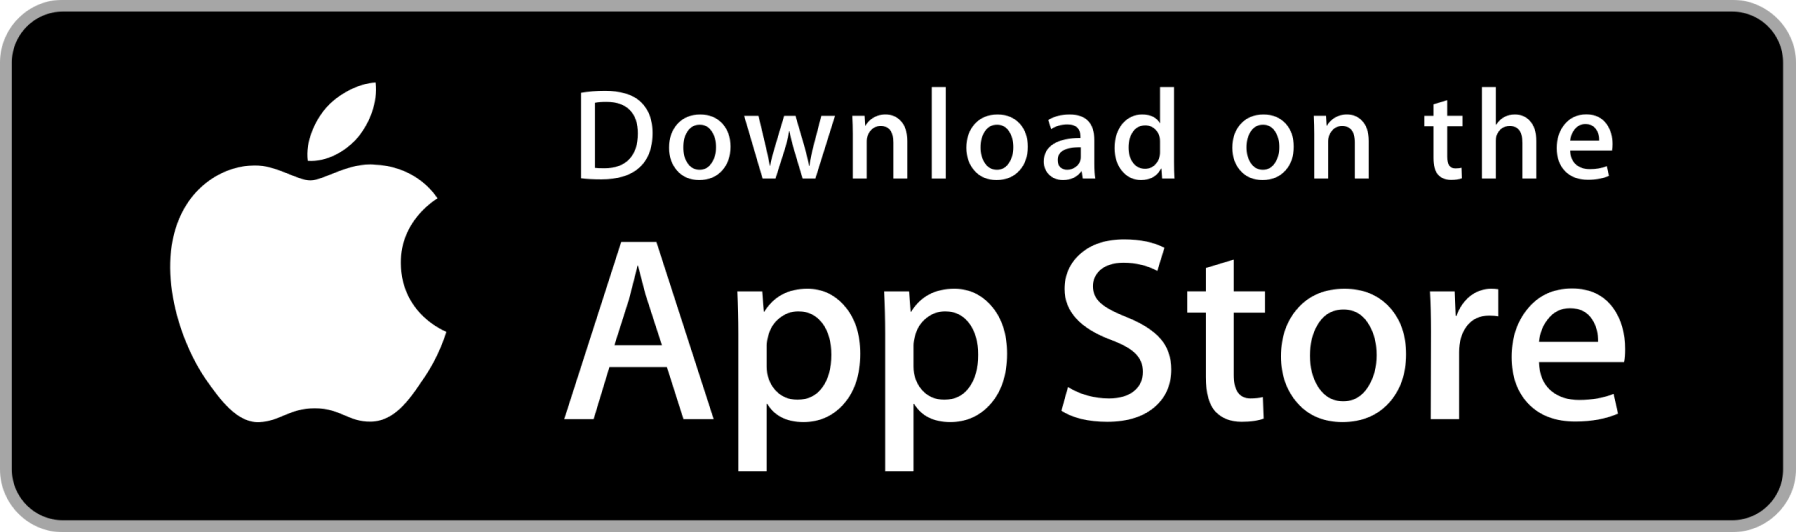 Next-AT Aviation Taining App - App-Store